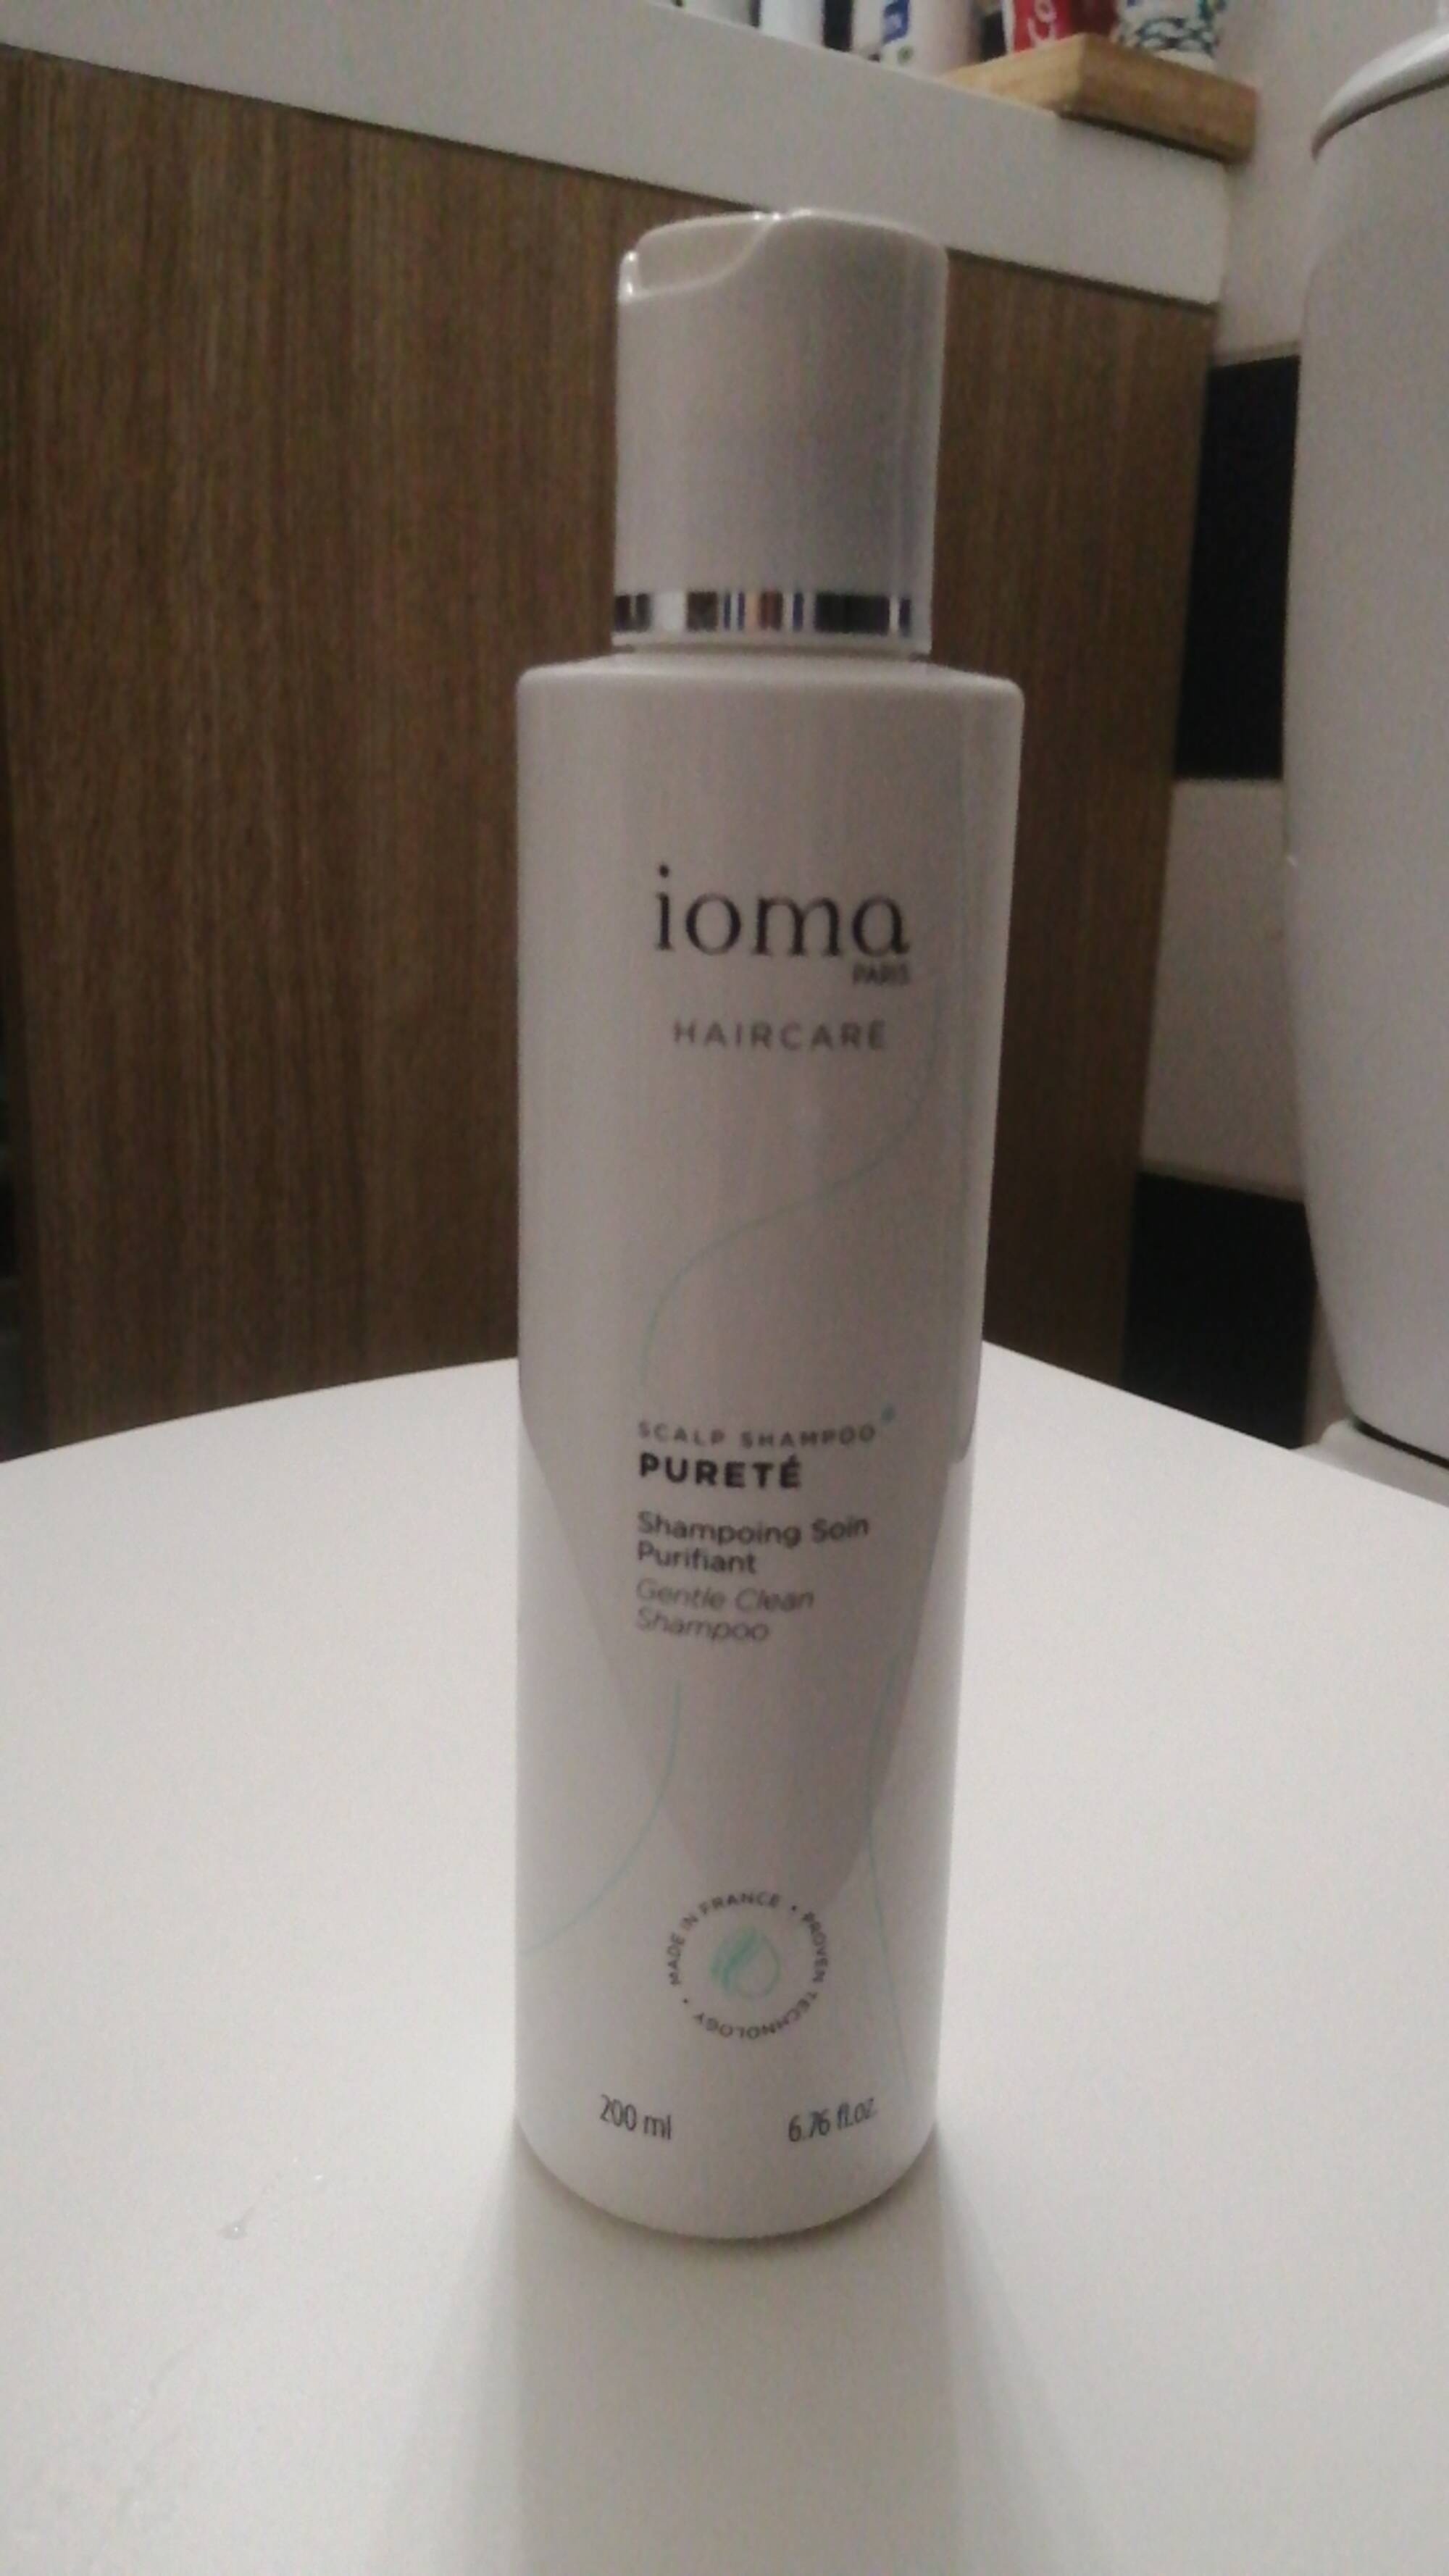 IOMA - Pureté - Shampoing soin purifiant 